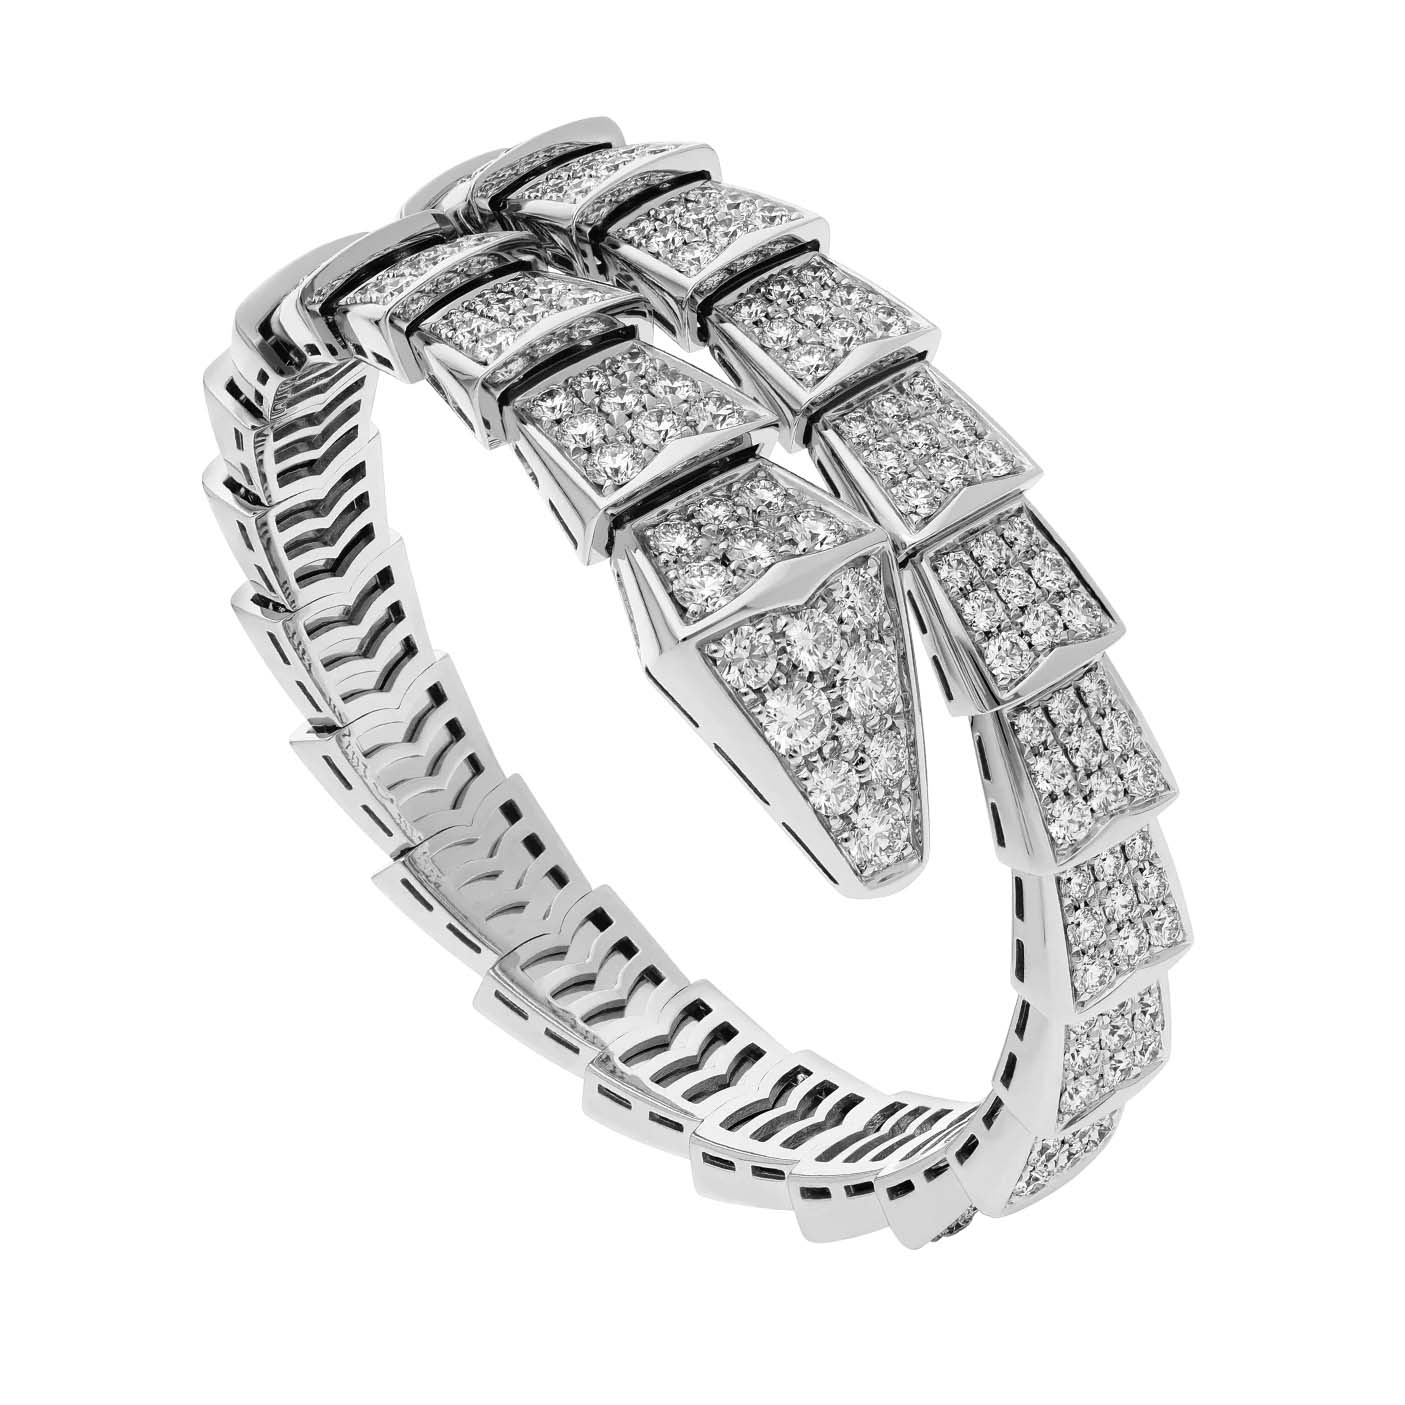 Wholesale OEM/ODM Jewelry Custom design one-coil bracelet in 18 kt white gold, set with full pavé diamonds OEM jewelry service